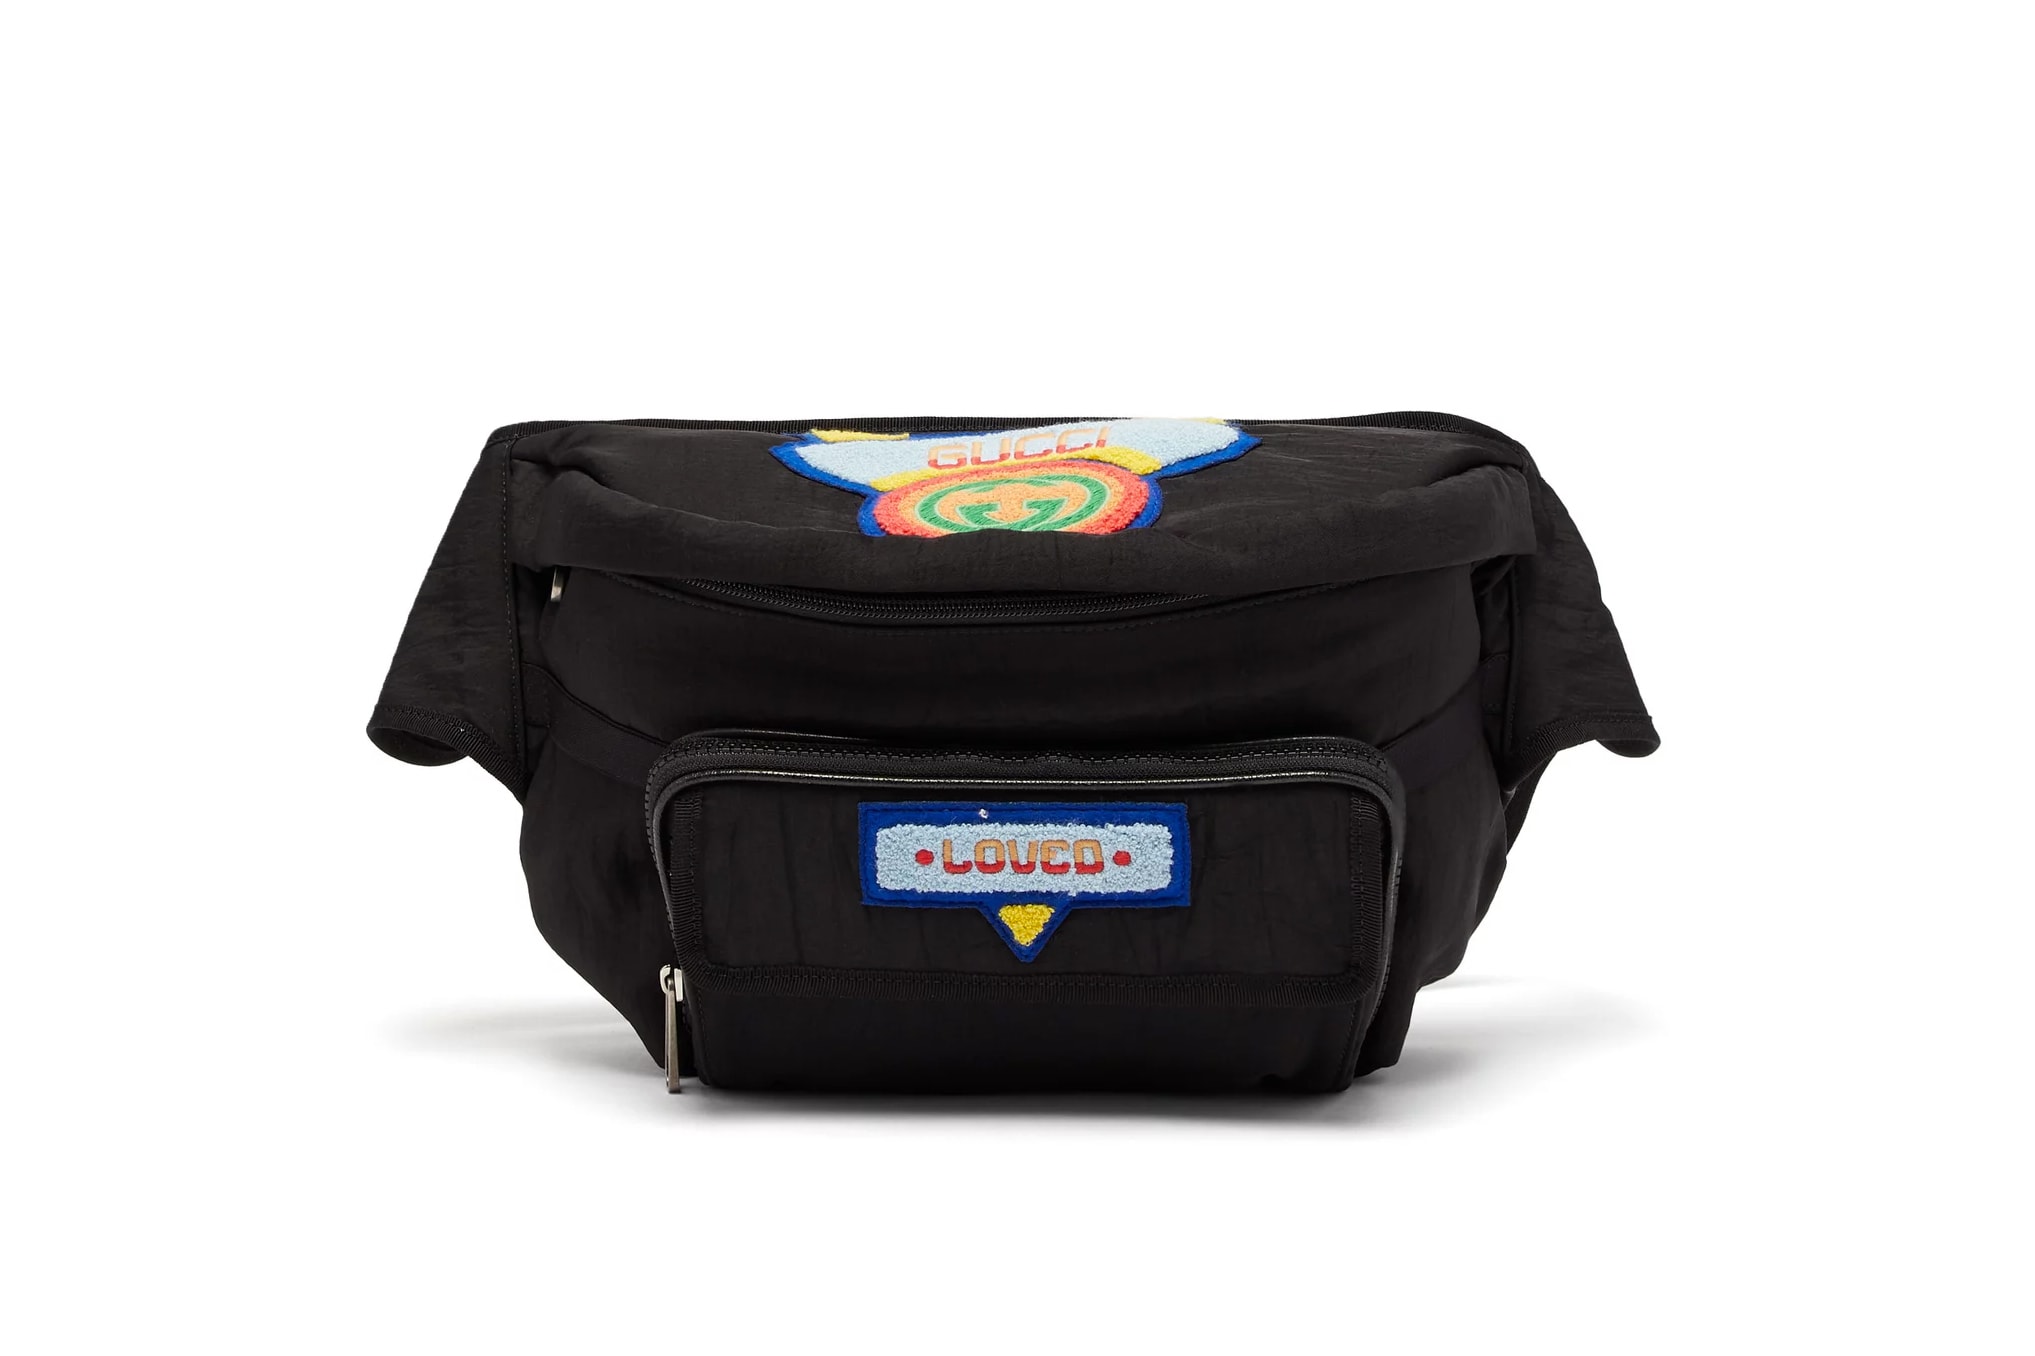 Gucci Two-Strap Retro Logo Fanny Pack Bag Bum Bag Rainbow Strap Belt Bag Pouch Alessanro Michele